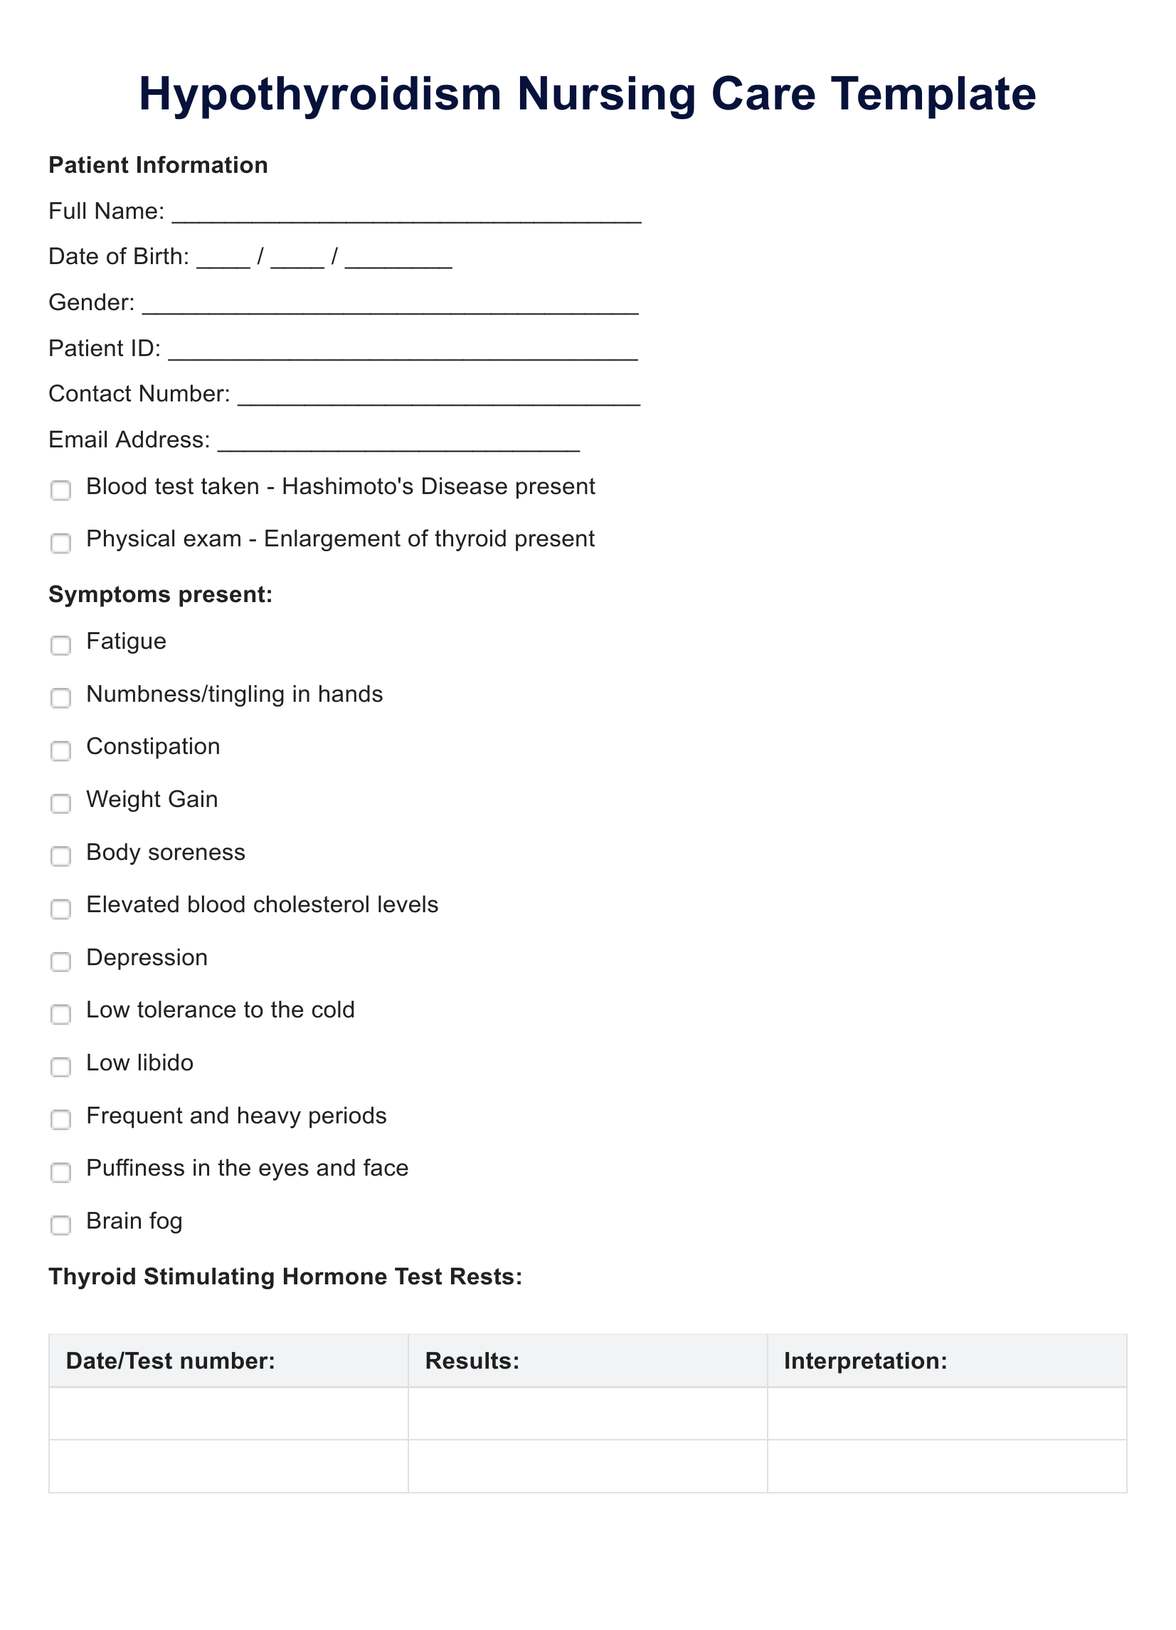 Hypothyroidism Nursing Care Plan PDF Example